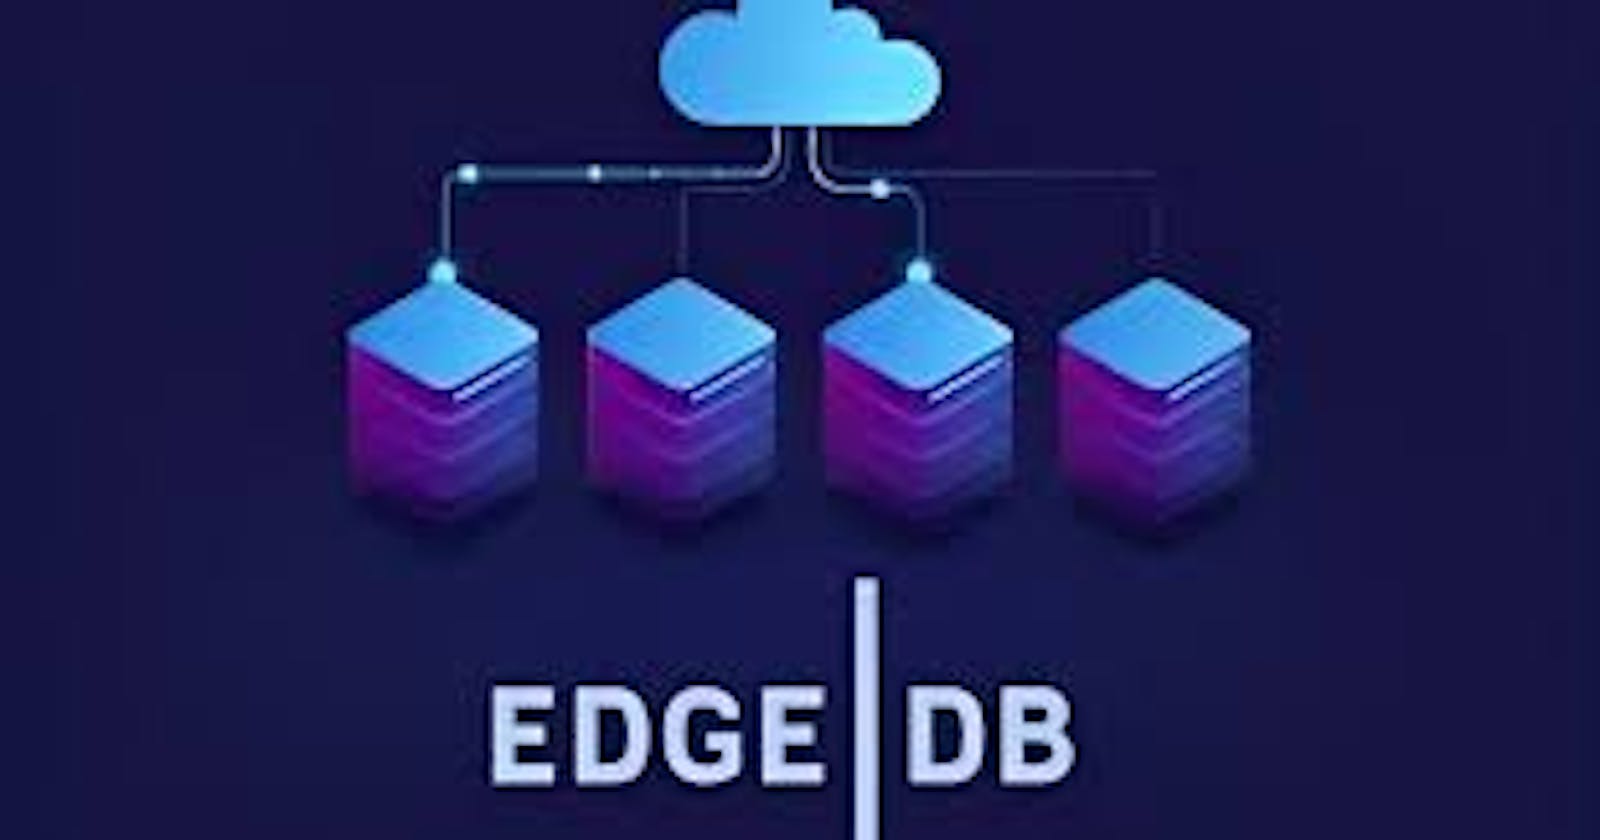 EdgeDB
EdgeDB is the next-generation object-relational database